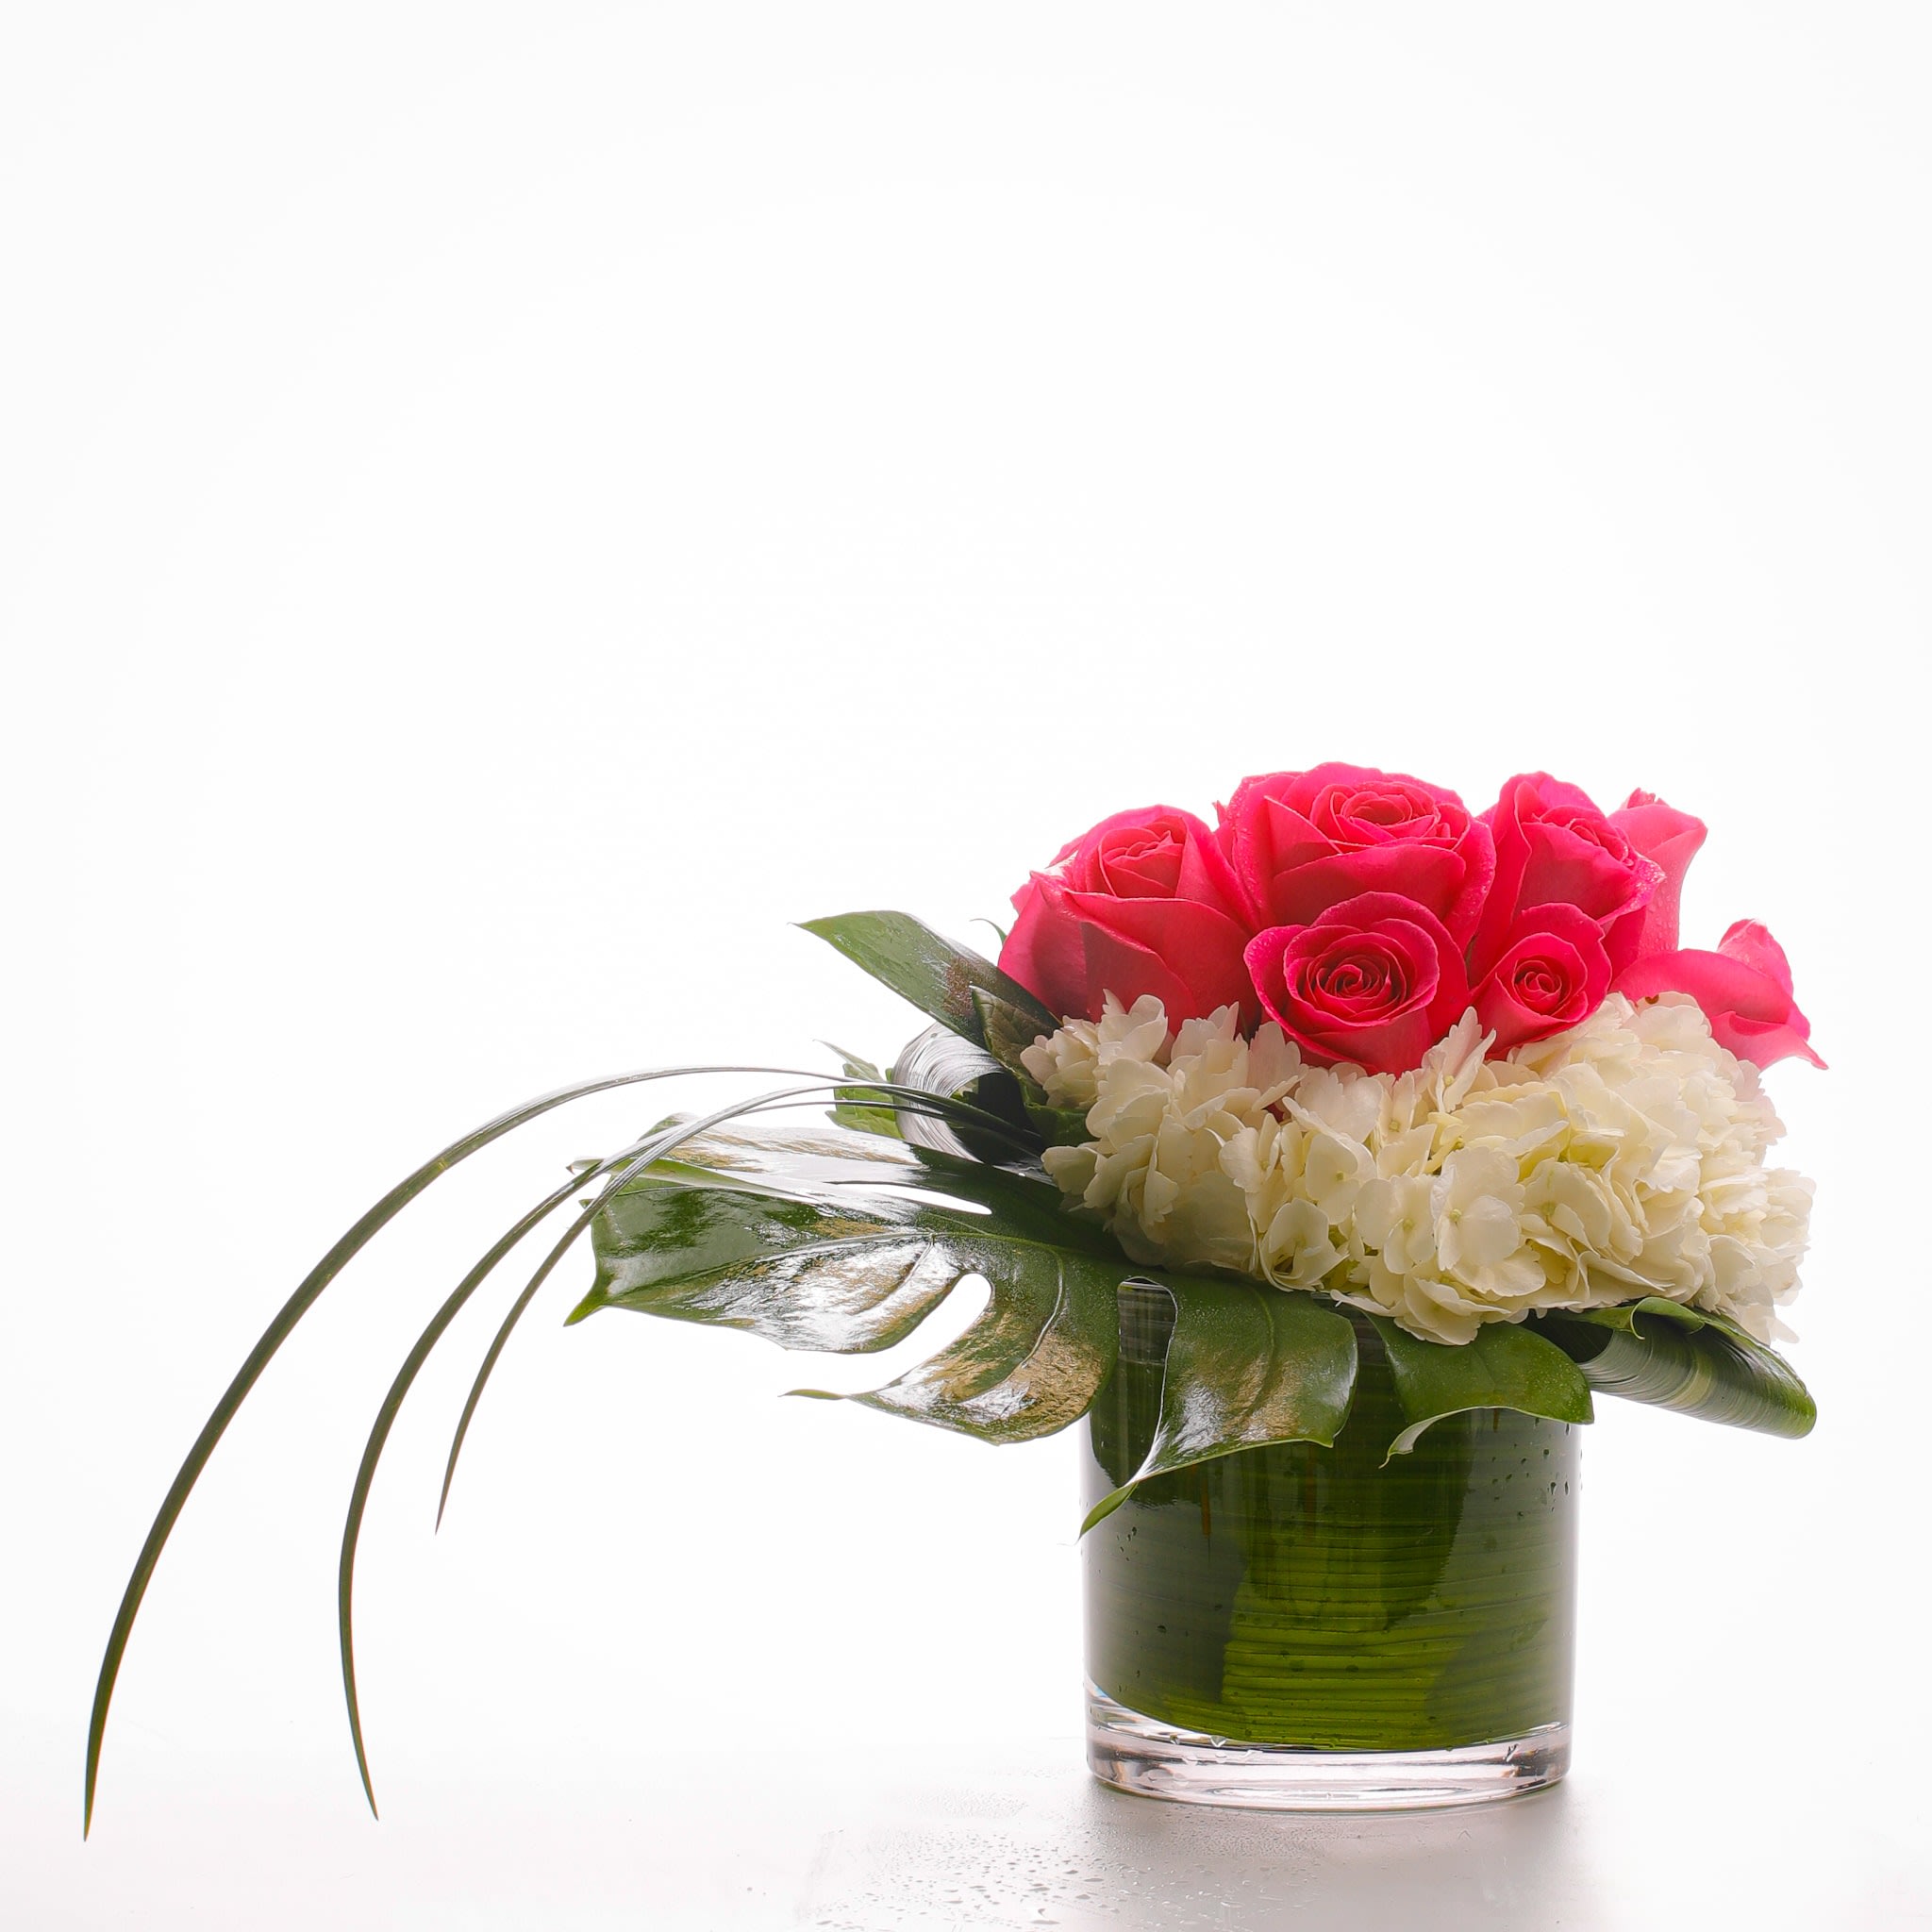 Vif Chaude - A Dozen Hot Pink Premium Roses surrounded by lush white Hydrangeas with plenty of Beards style.